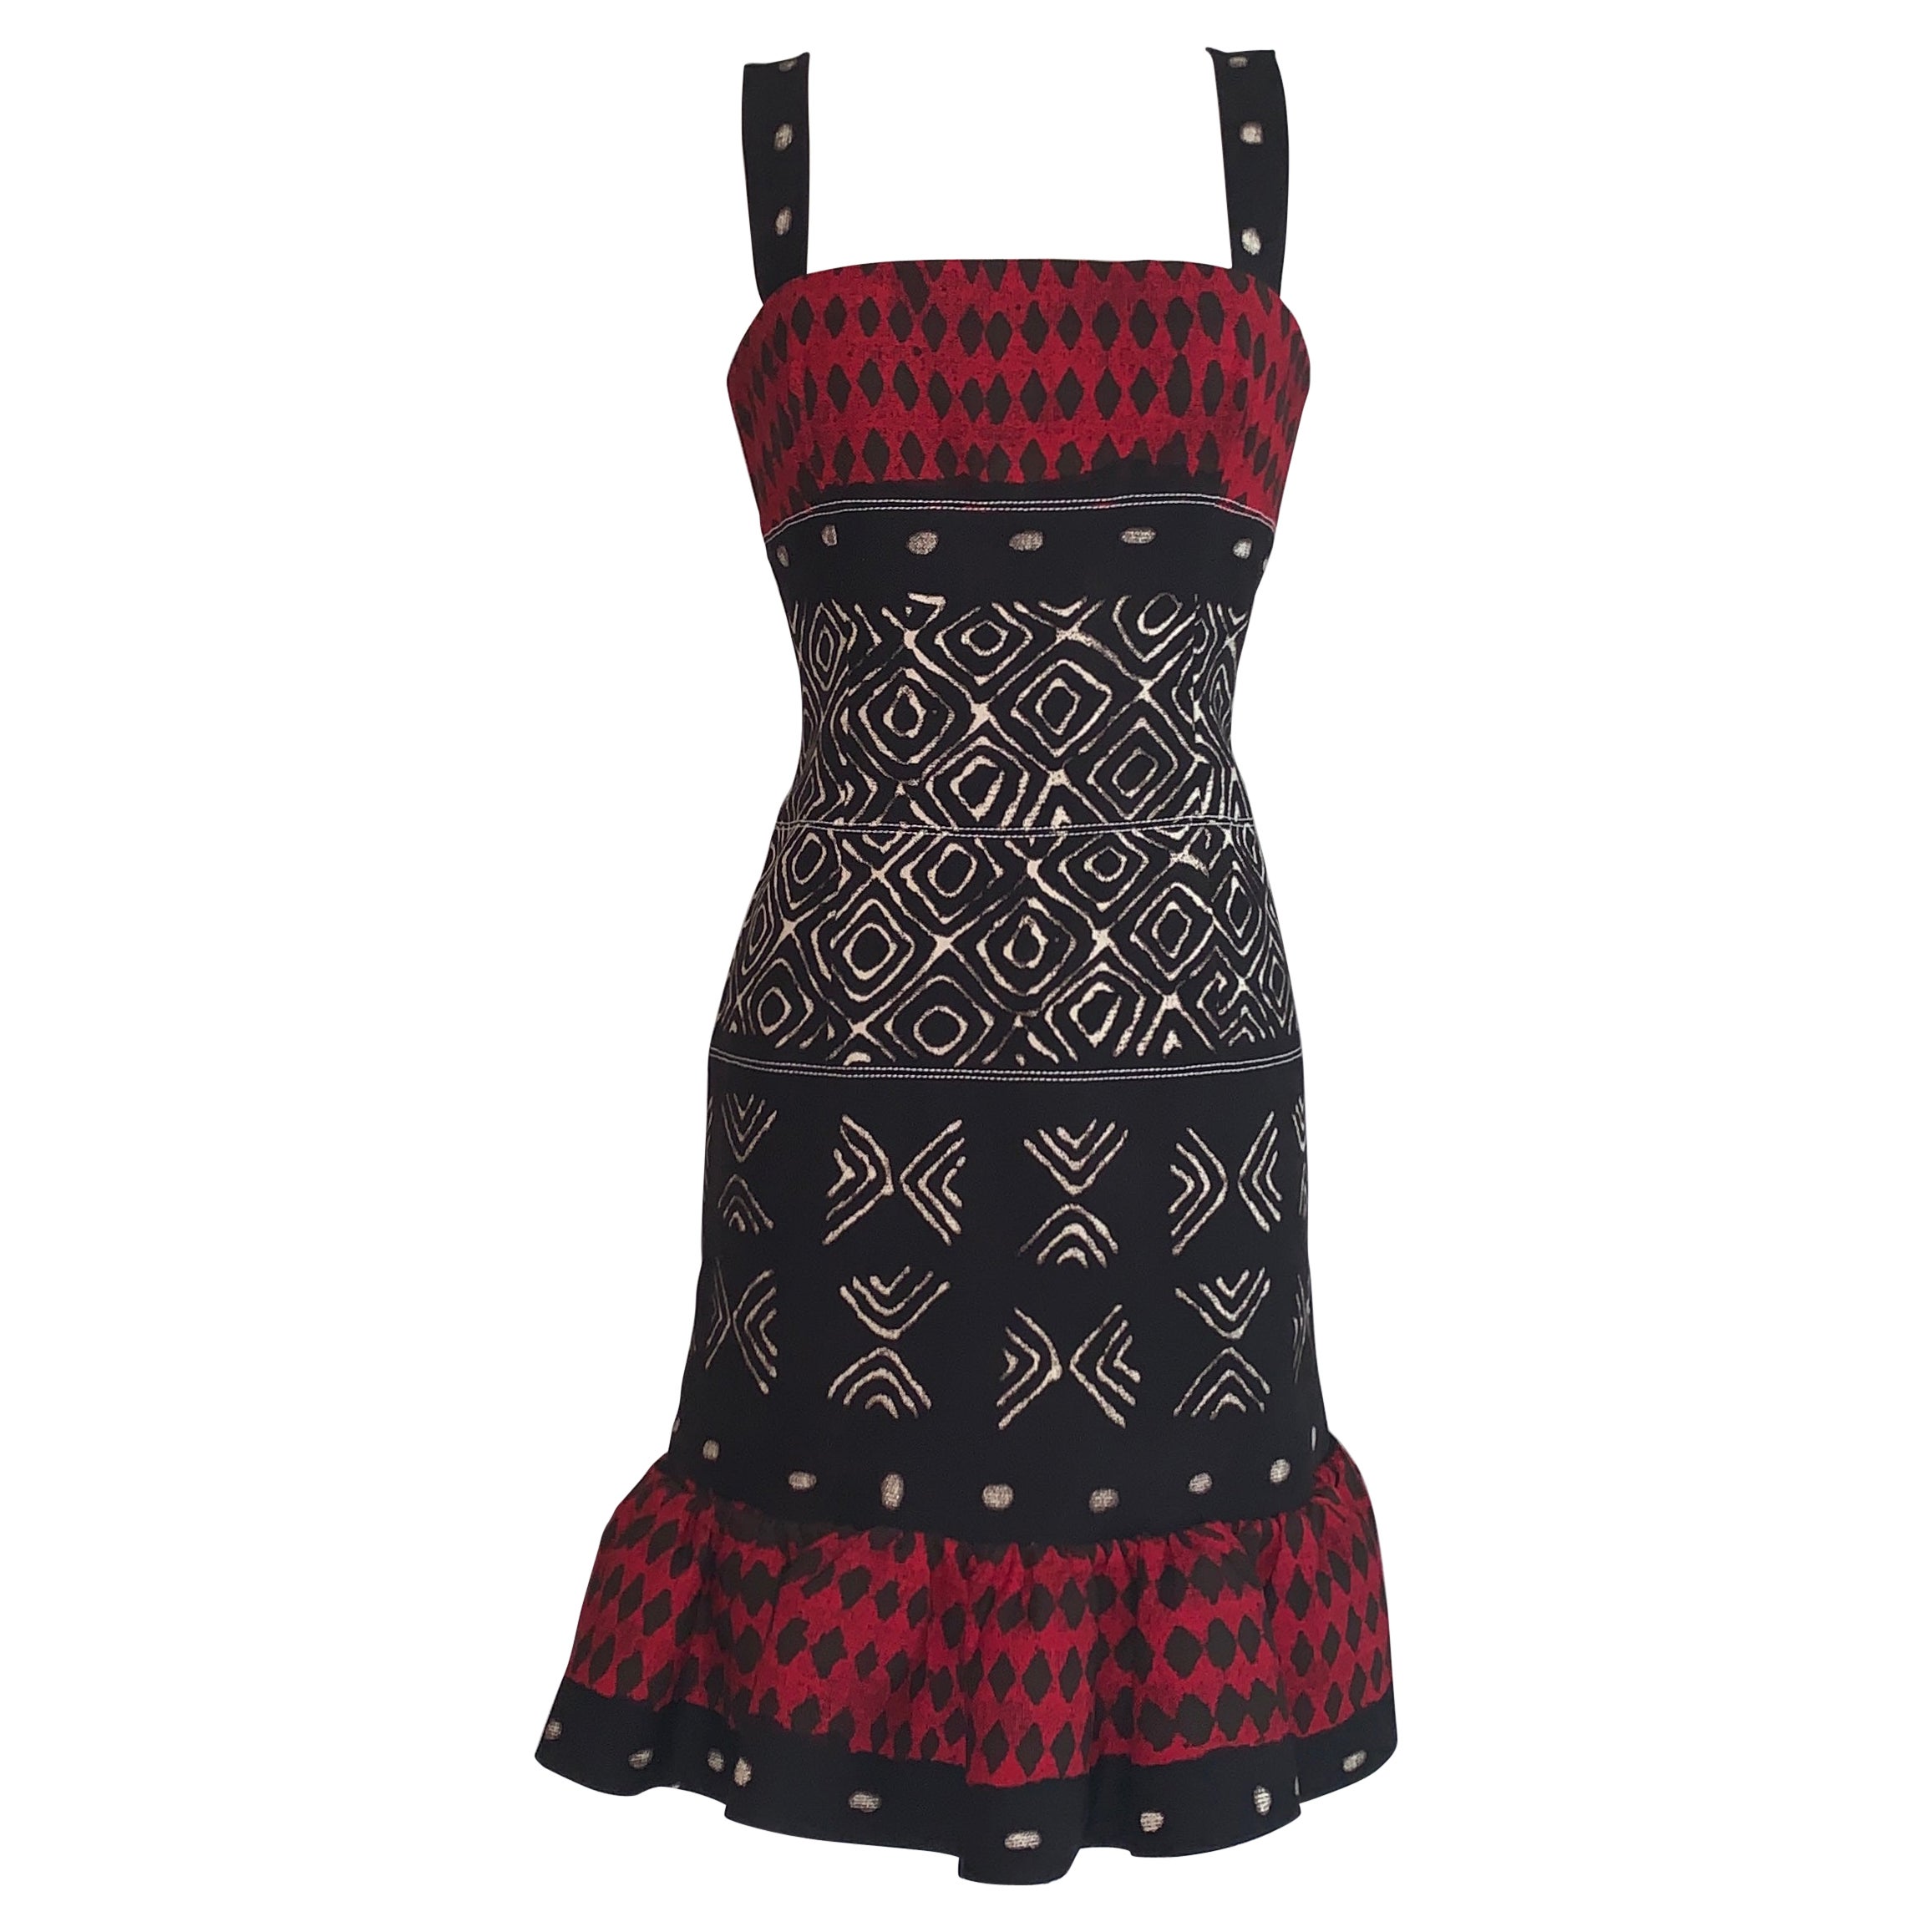 Oscar de la Renta Red and Black Tribal Print Dress with Ruffle Bottom